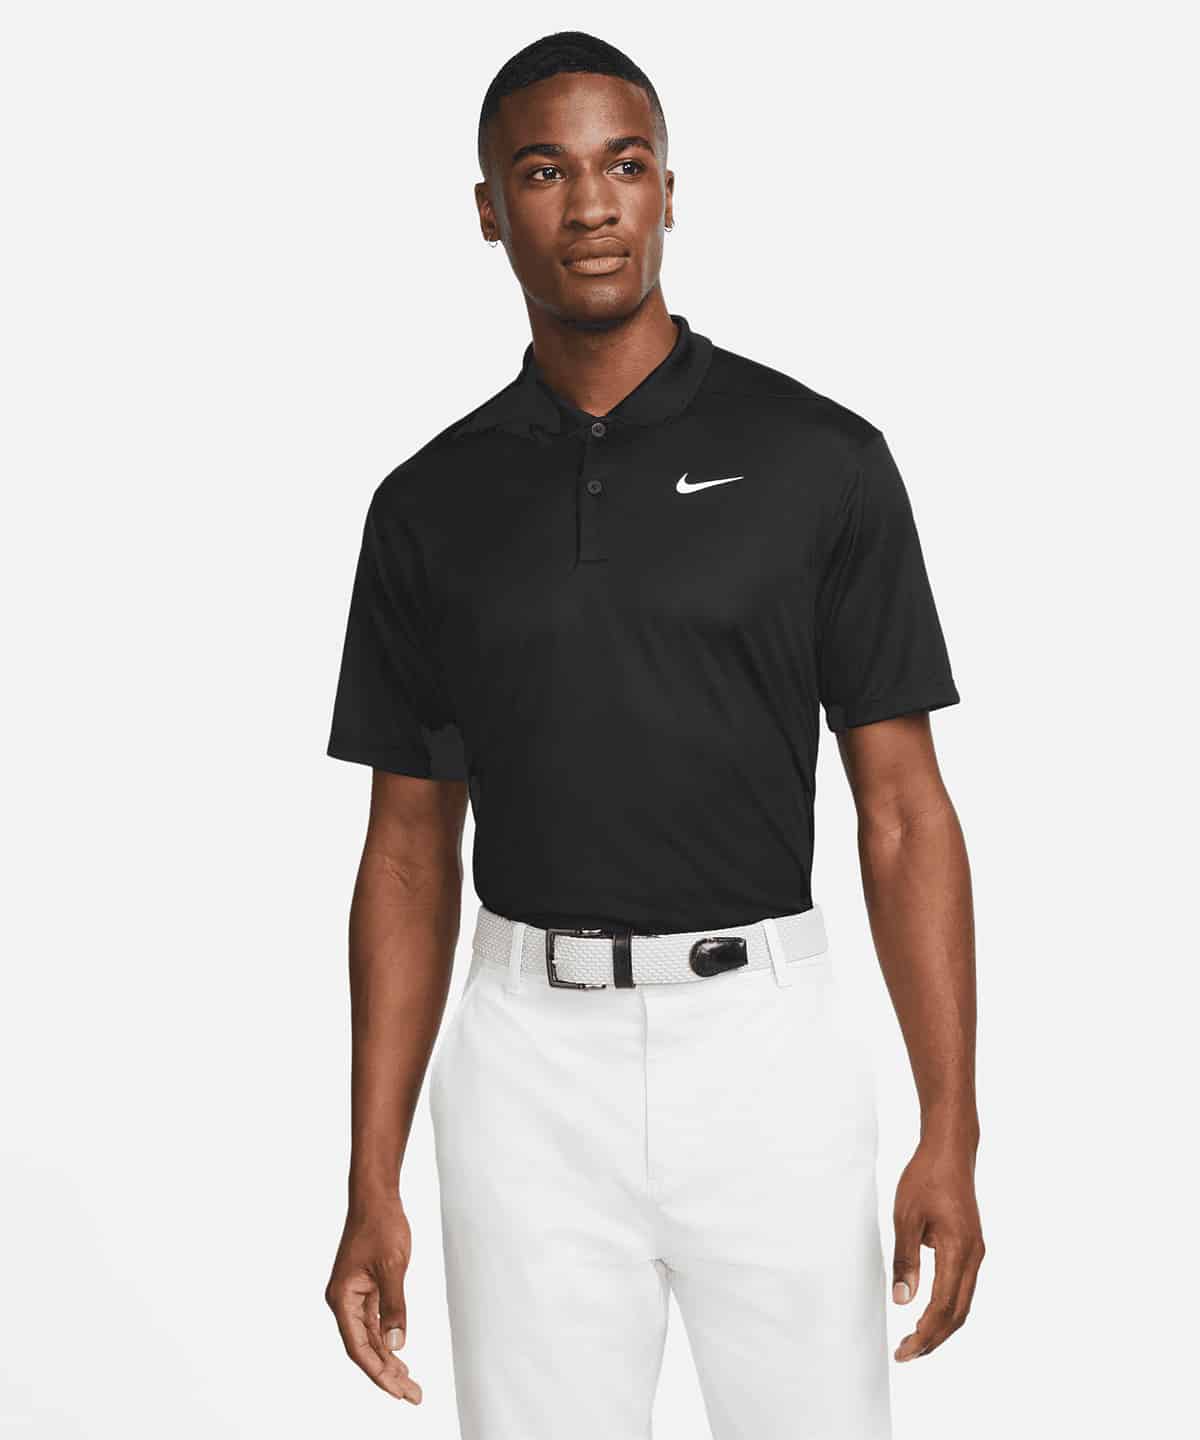 Nike Dri-FIT victory solid golf polo University Black - The Golf Store 4U